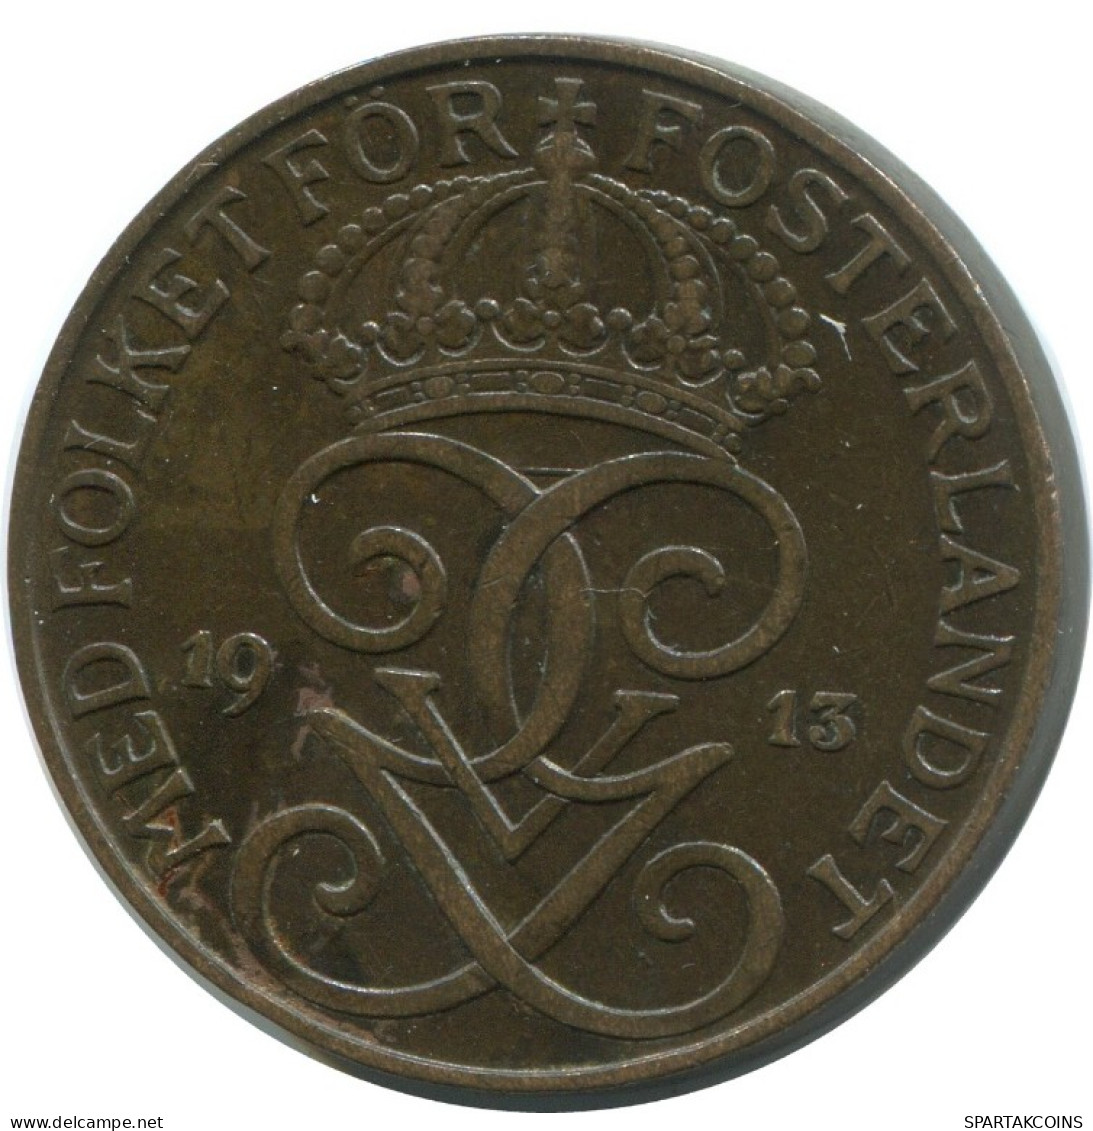 5 ORE 1913 SWEDEN Coin #AC461.2.U.A - Sweden